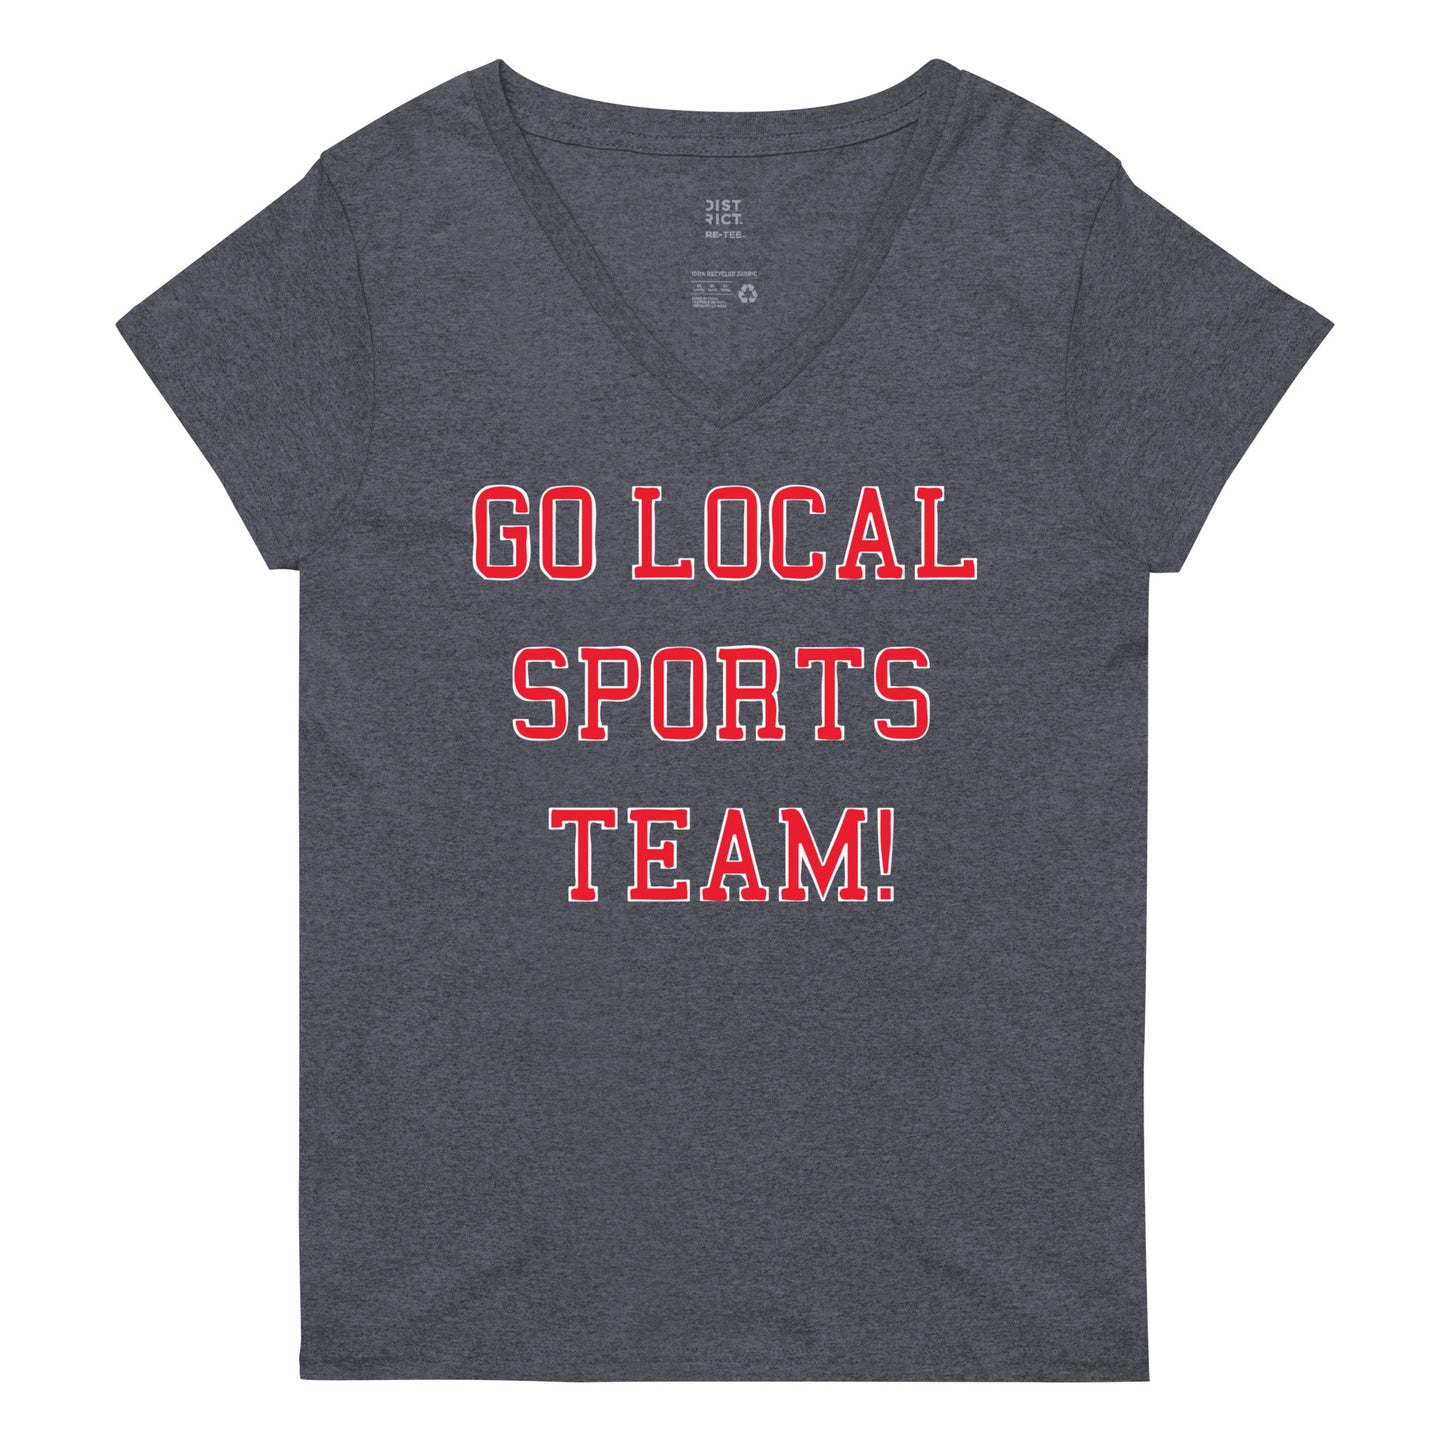 Go Local Sports Team! Women's V-Neck Tee